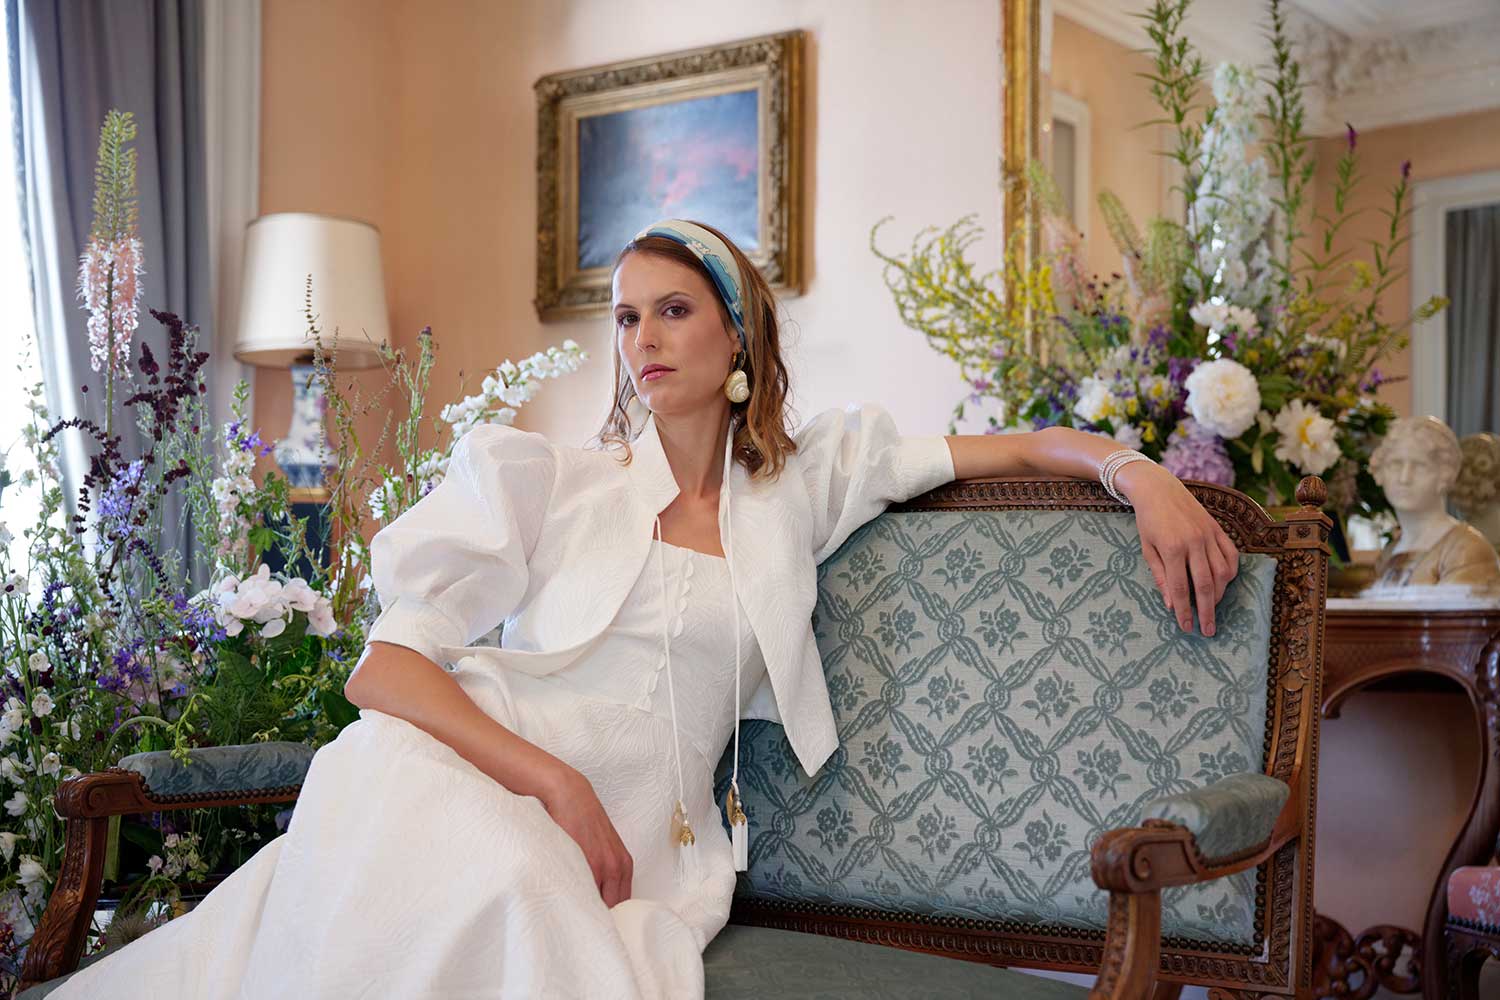 Atelier Manon Pascual, robe de mariée , collection couture 2021, Diana